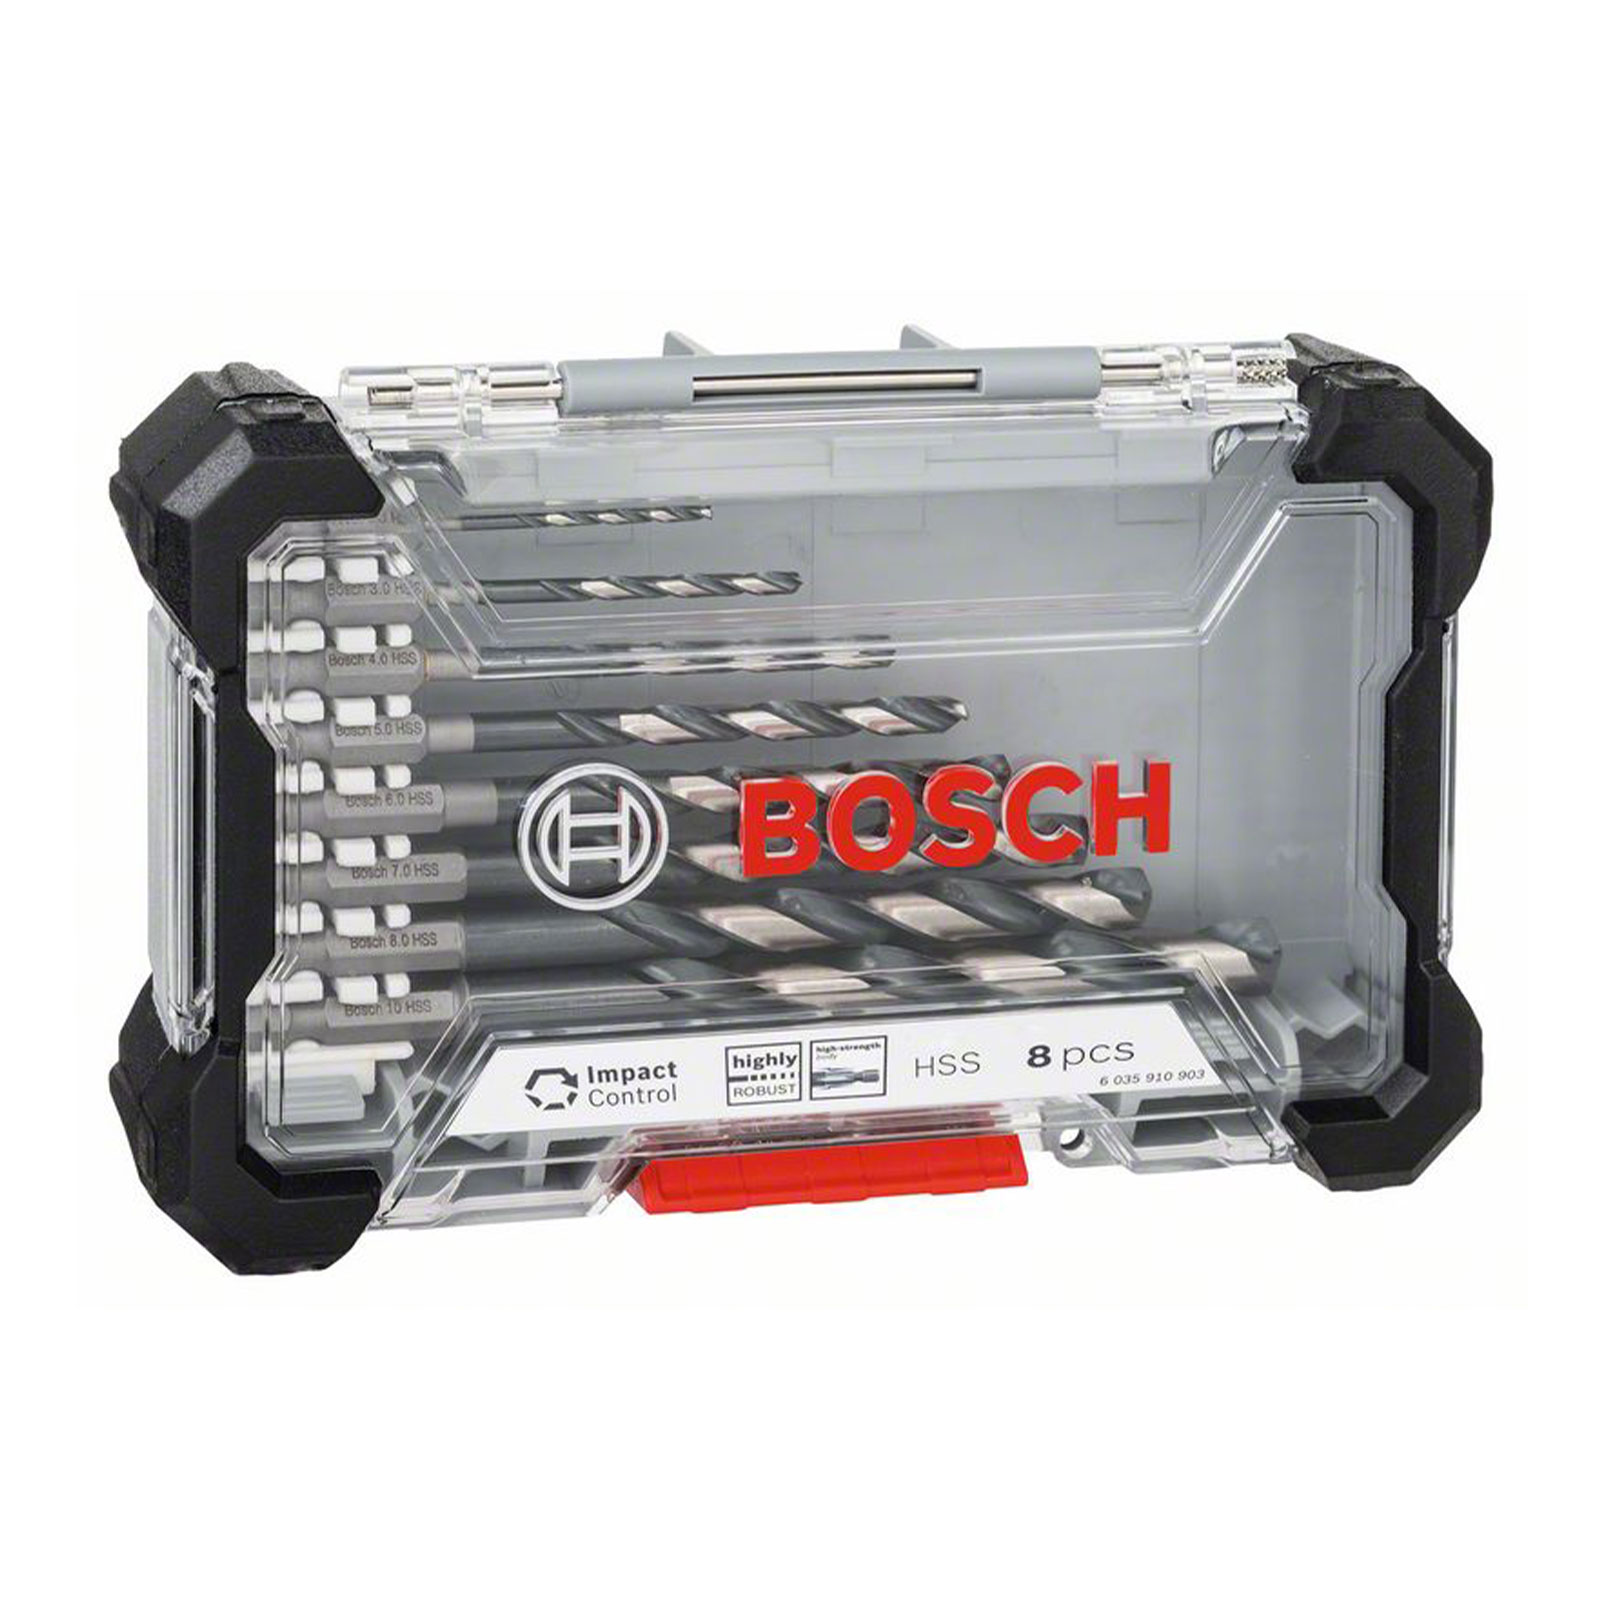 Bosch Professional 8-tlg. Impact Control HSS-Bohrer-Set